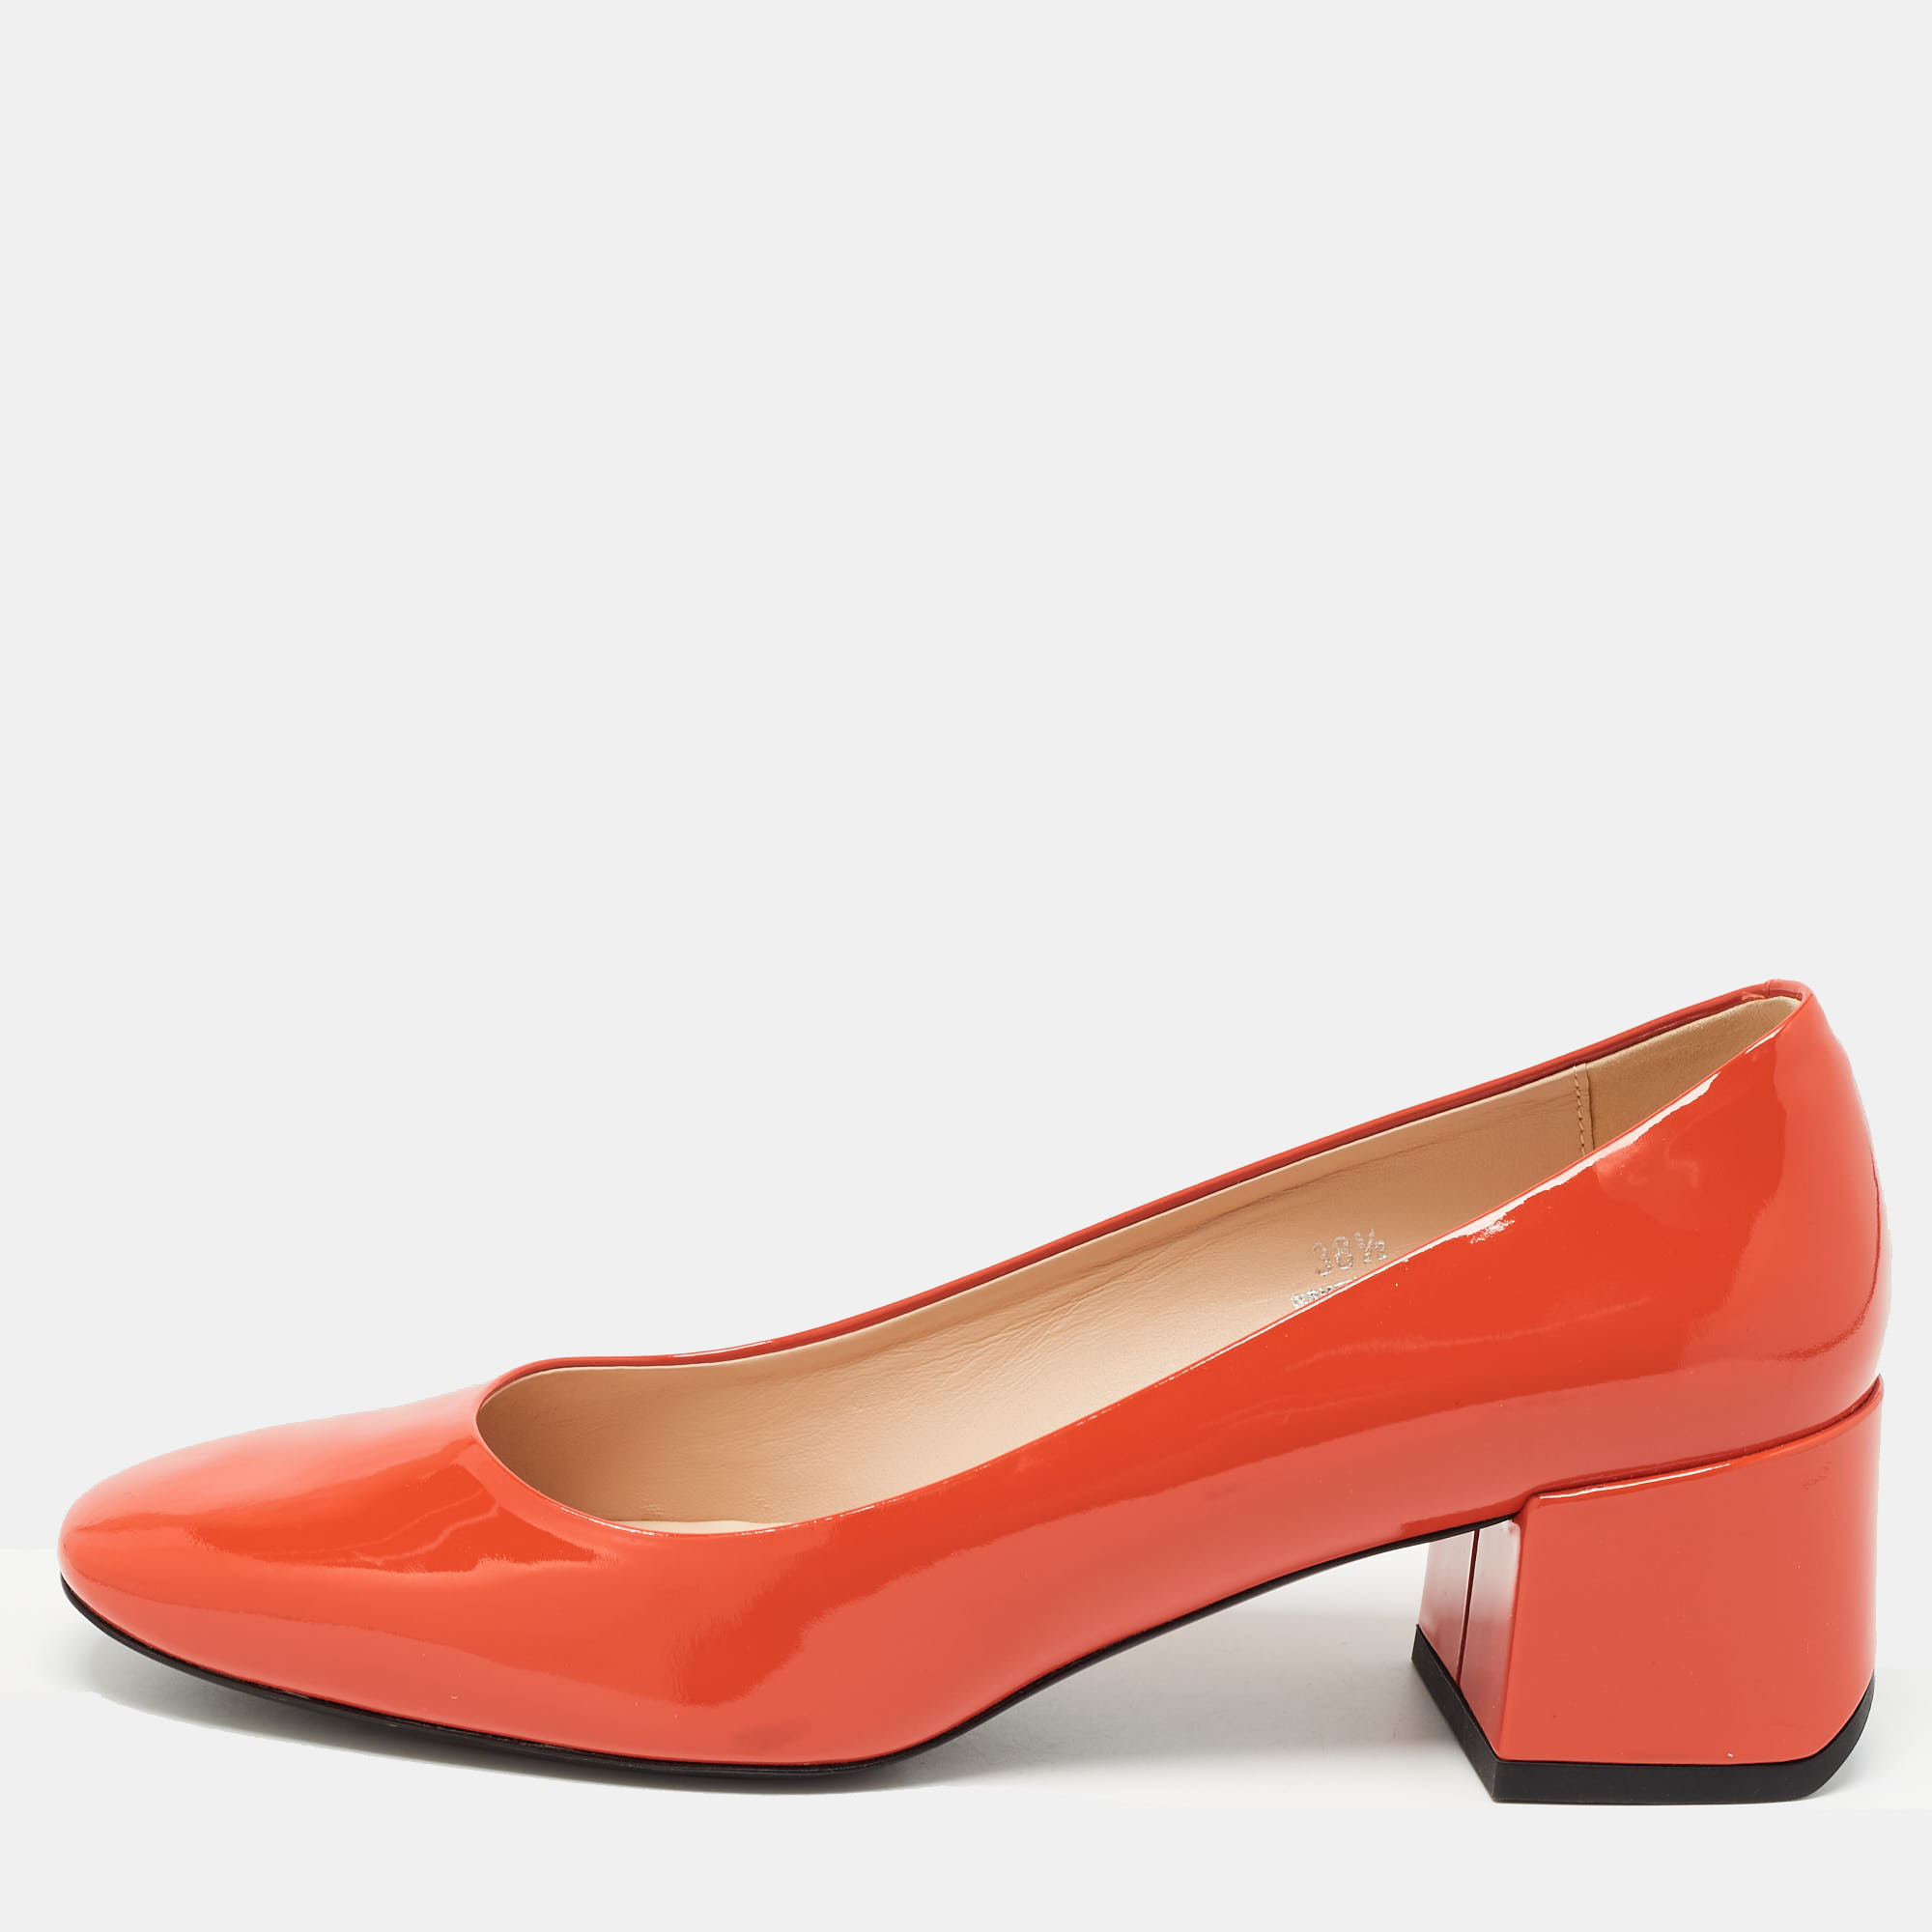 Tod's orange patent leather block heel pumps size 38.5